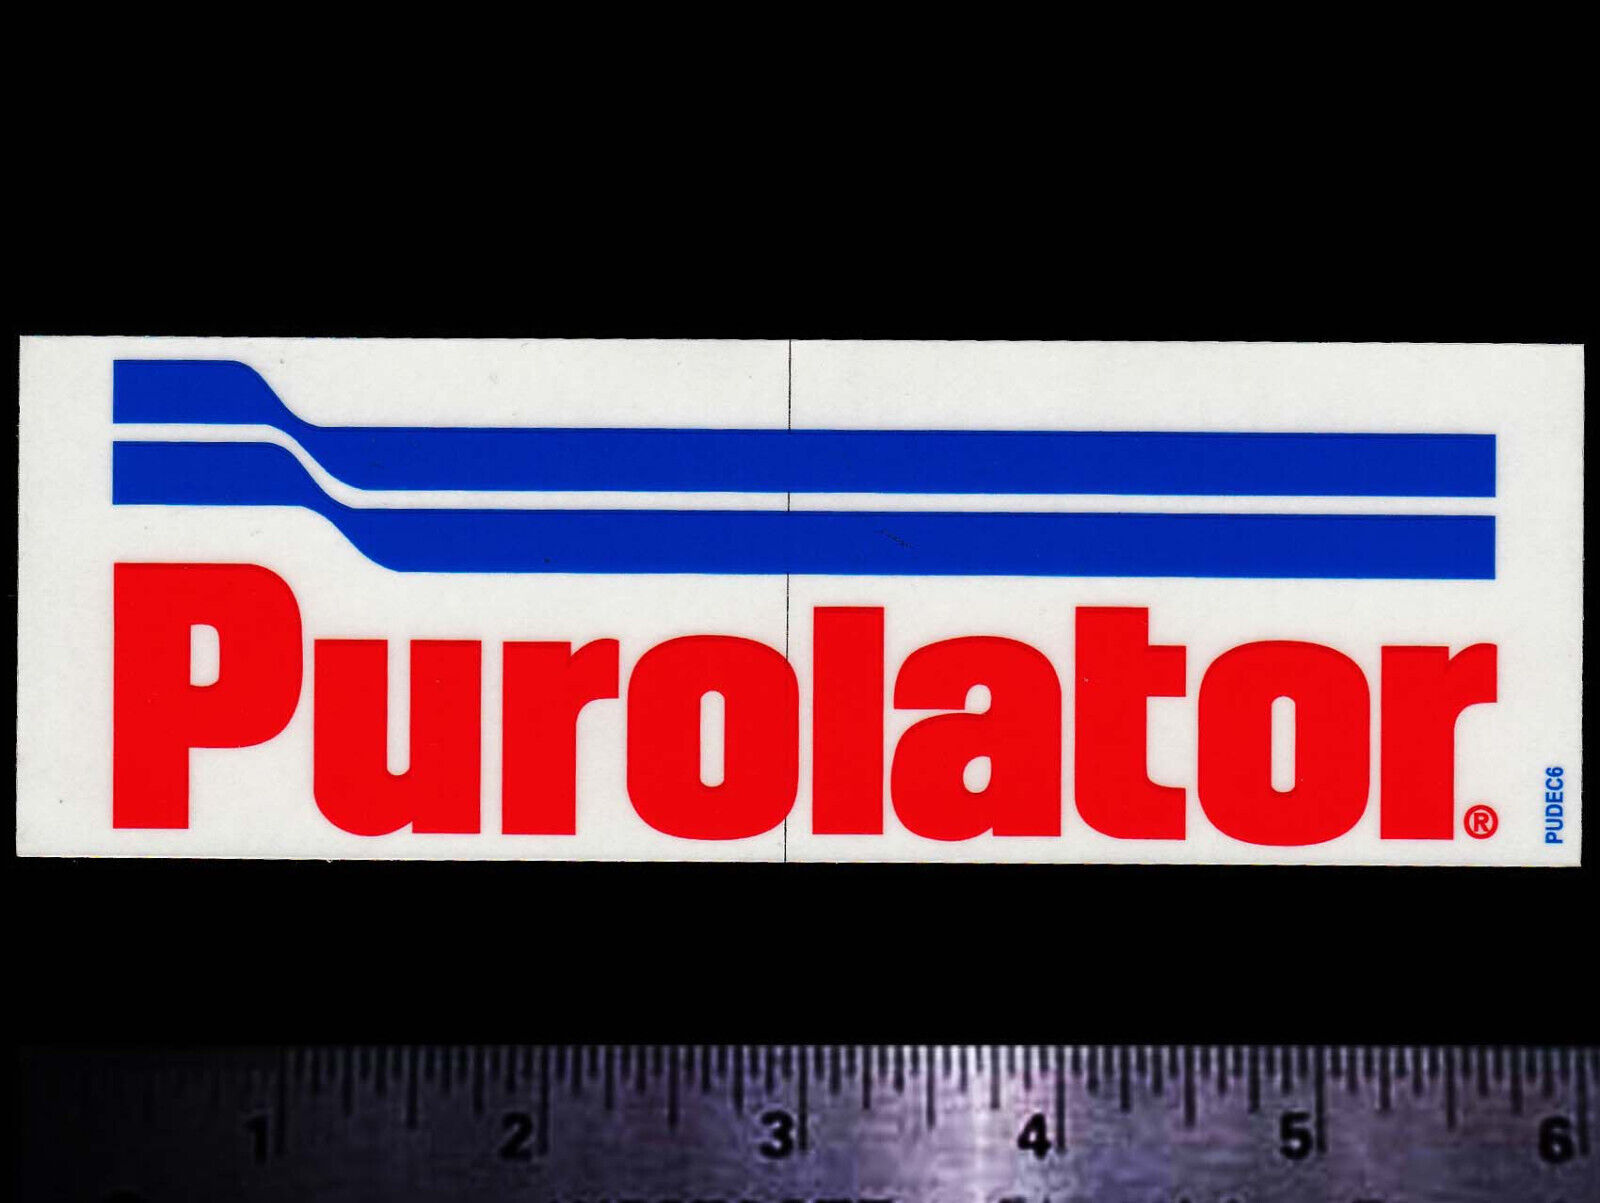 PUROLATOR Filters - Original Vintage 1970's 80’s Racing Decal/Sticker